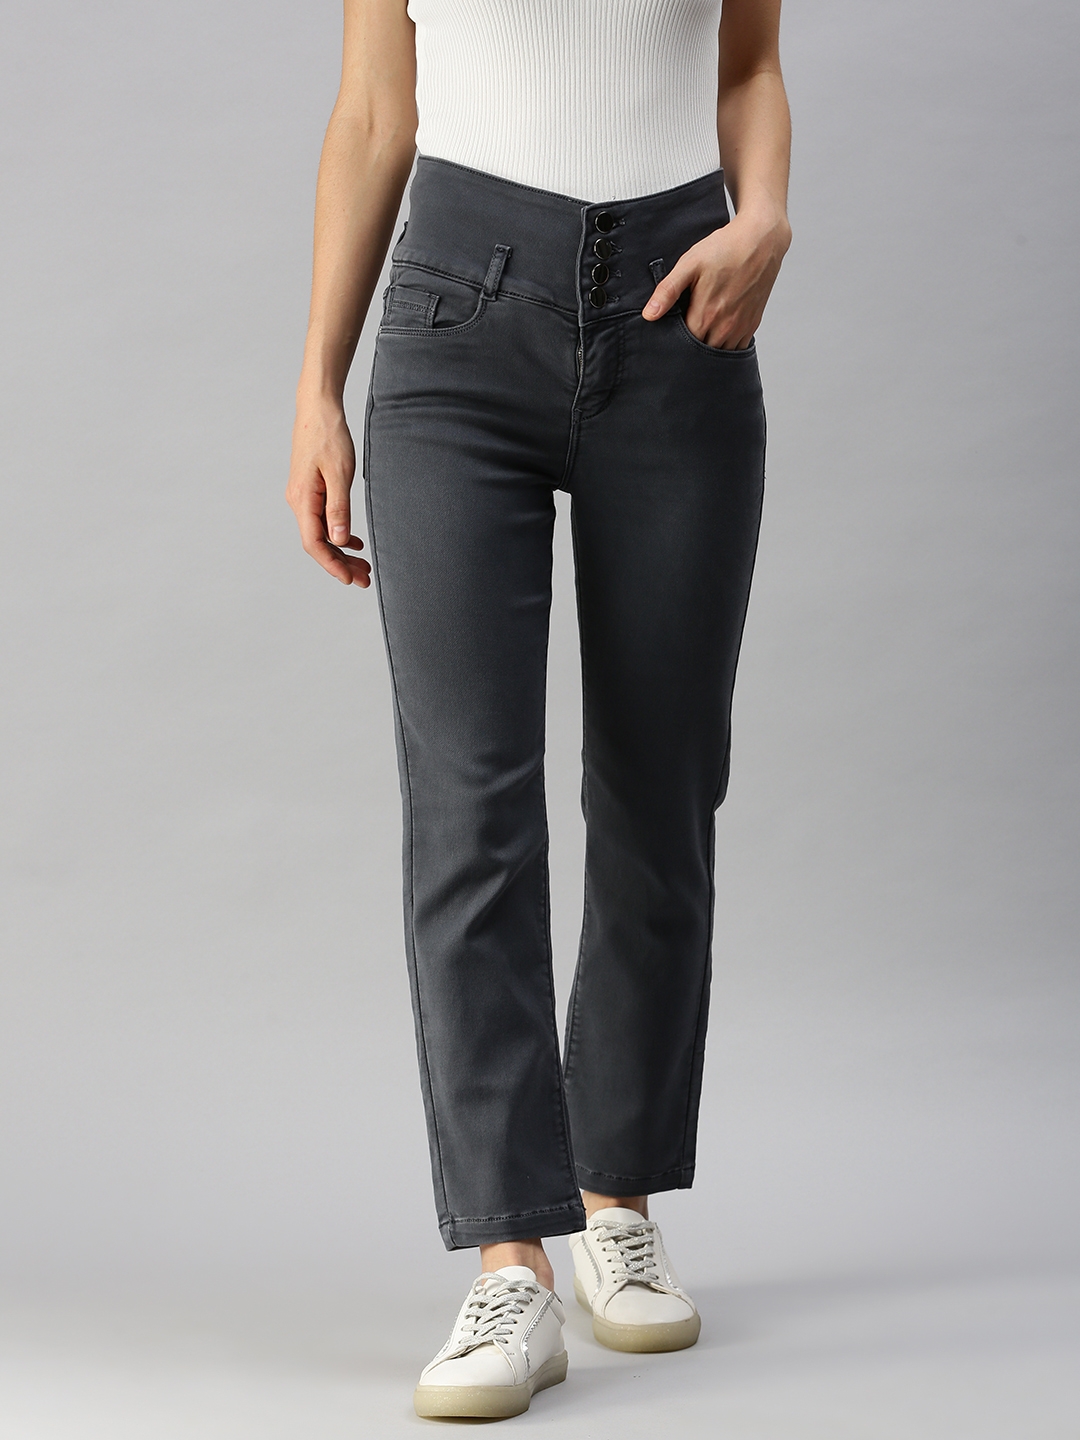 SHOWOFF Women's Clean Look Grey Regular Fit Denim Jeans